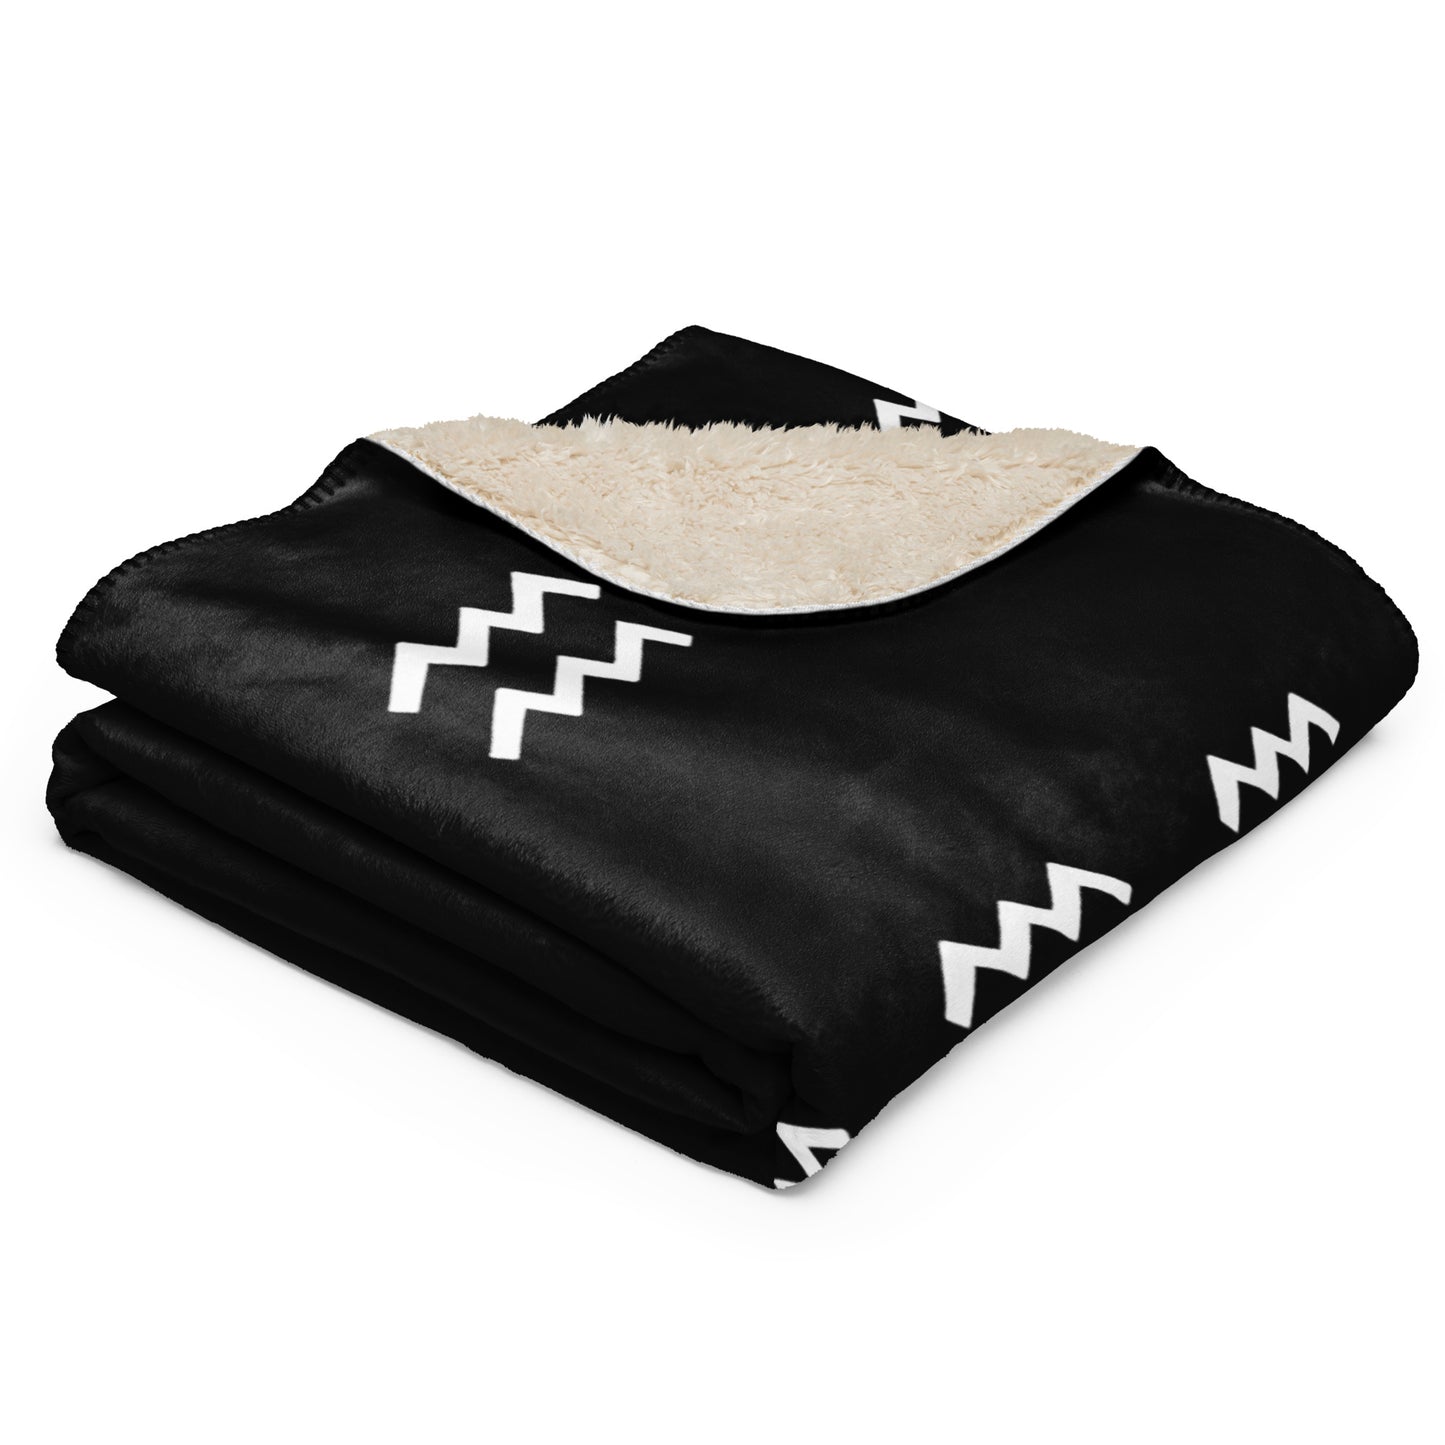 Aquarius Sherpa blanket Black